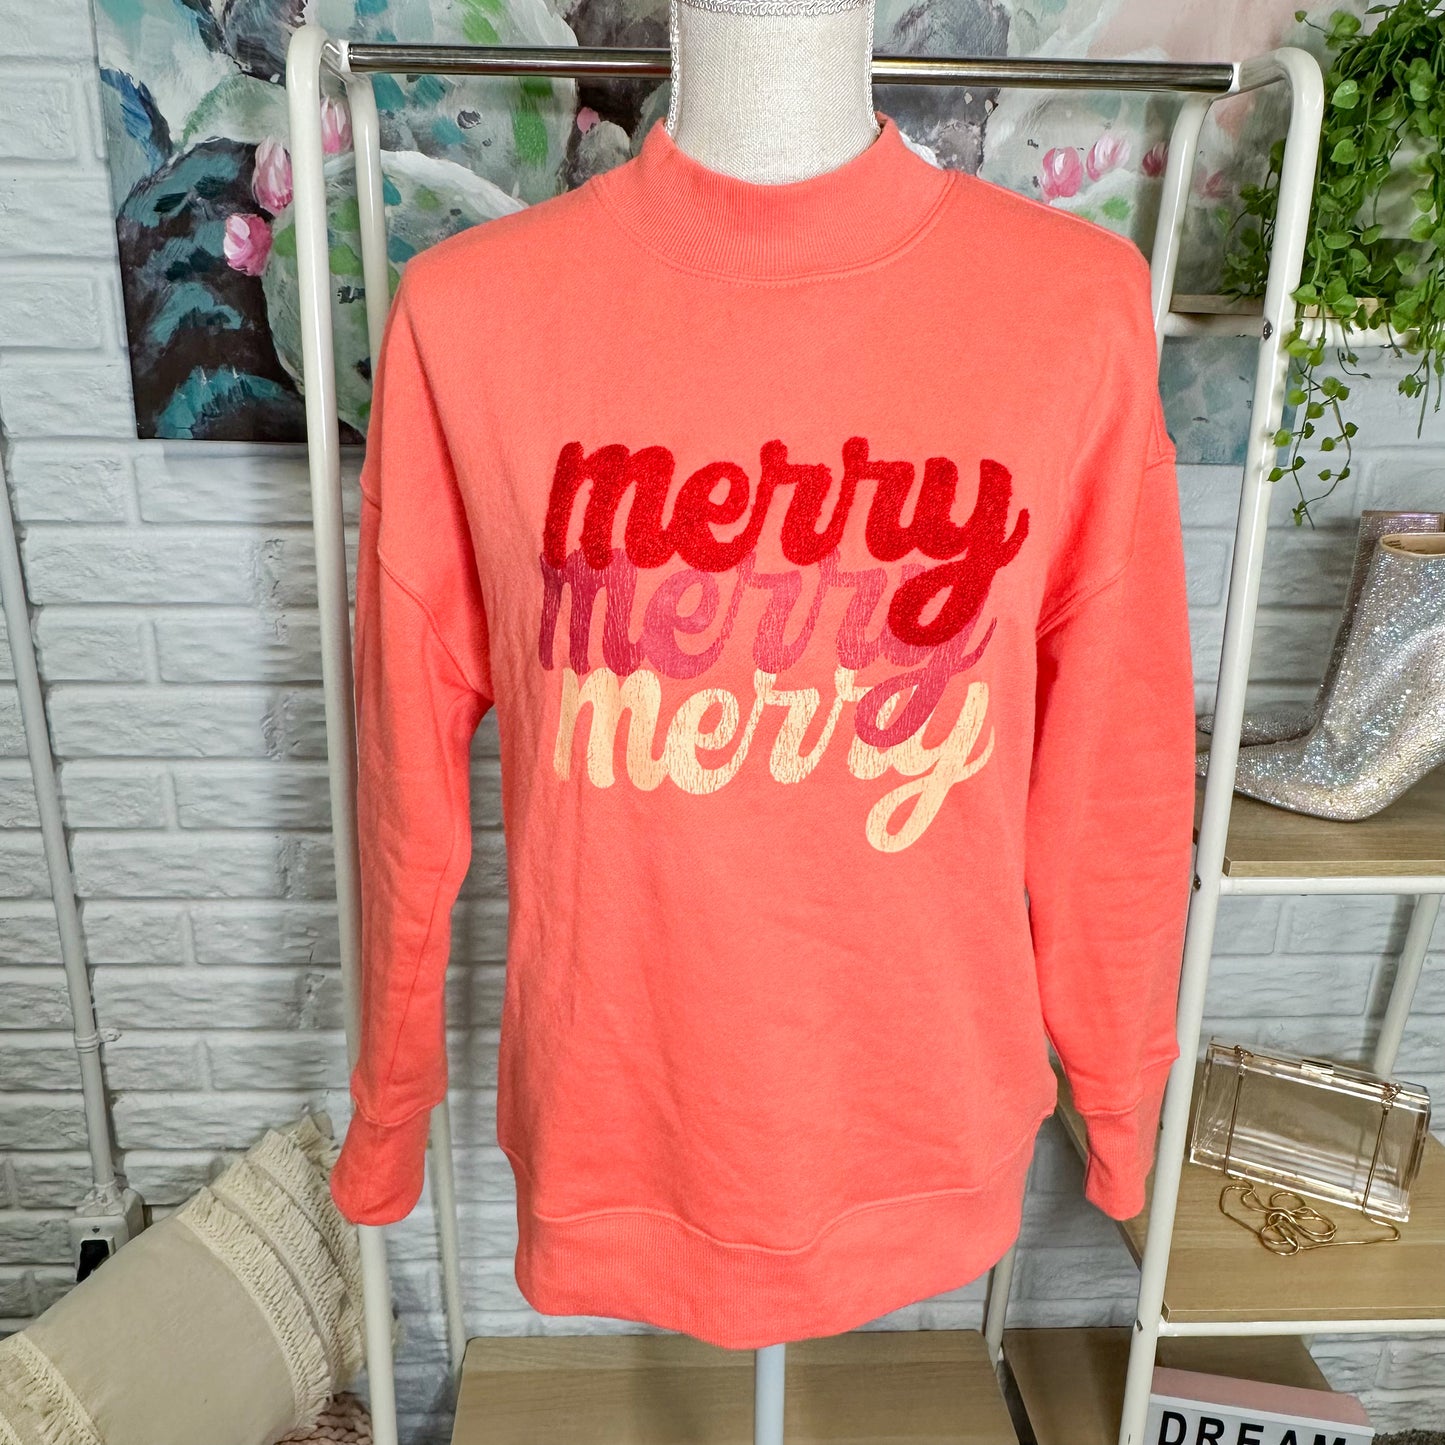 Maurice’s Merry Graphic Sweatshirt Size Small